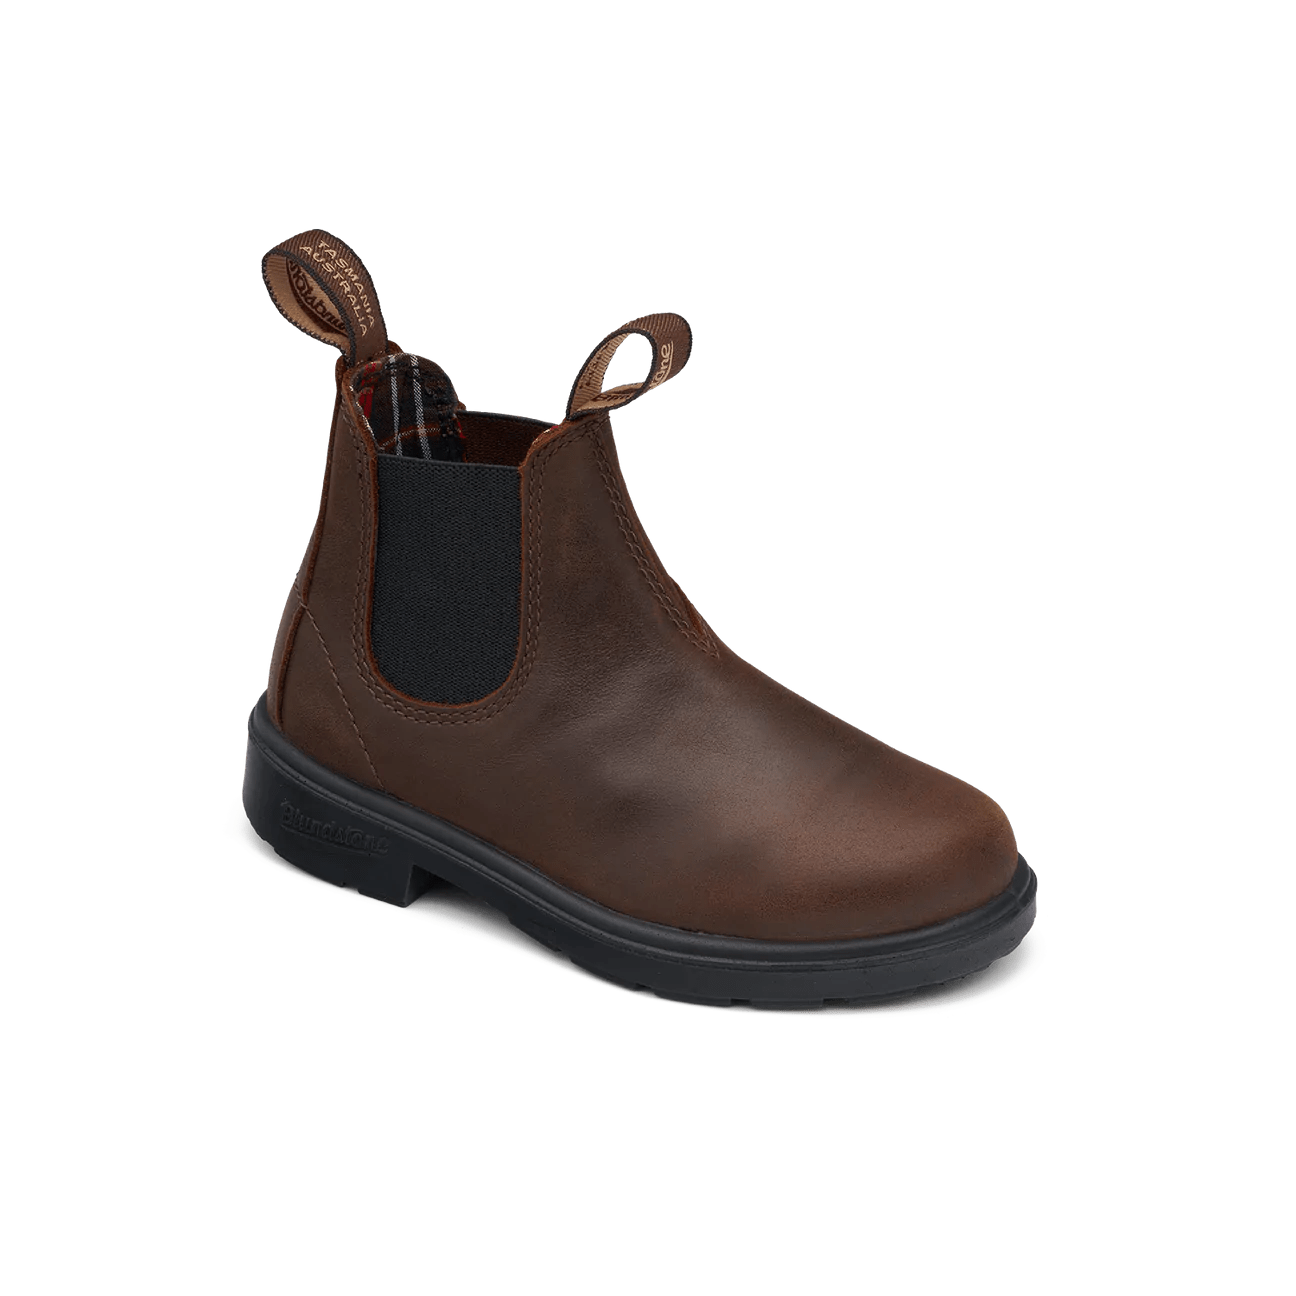 Blundstone boots Blundstone 1468 - Kids Antique Brown